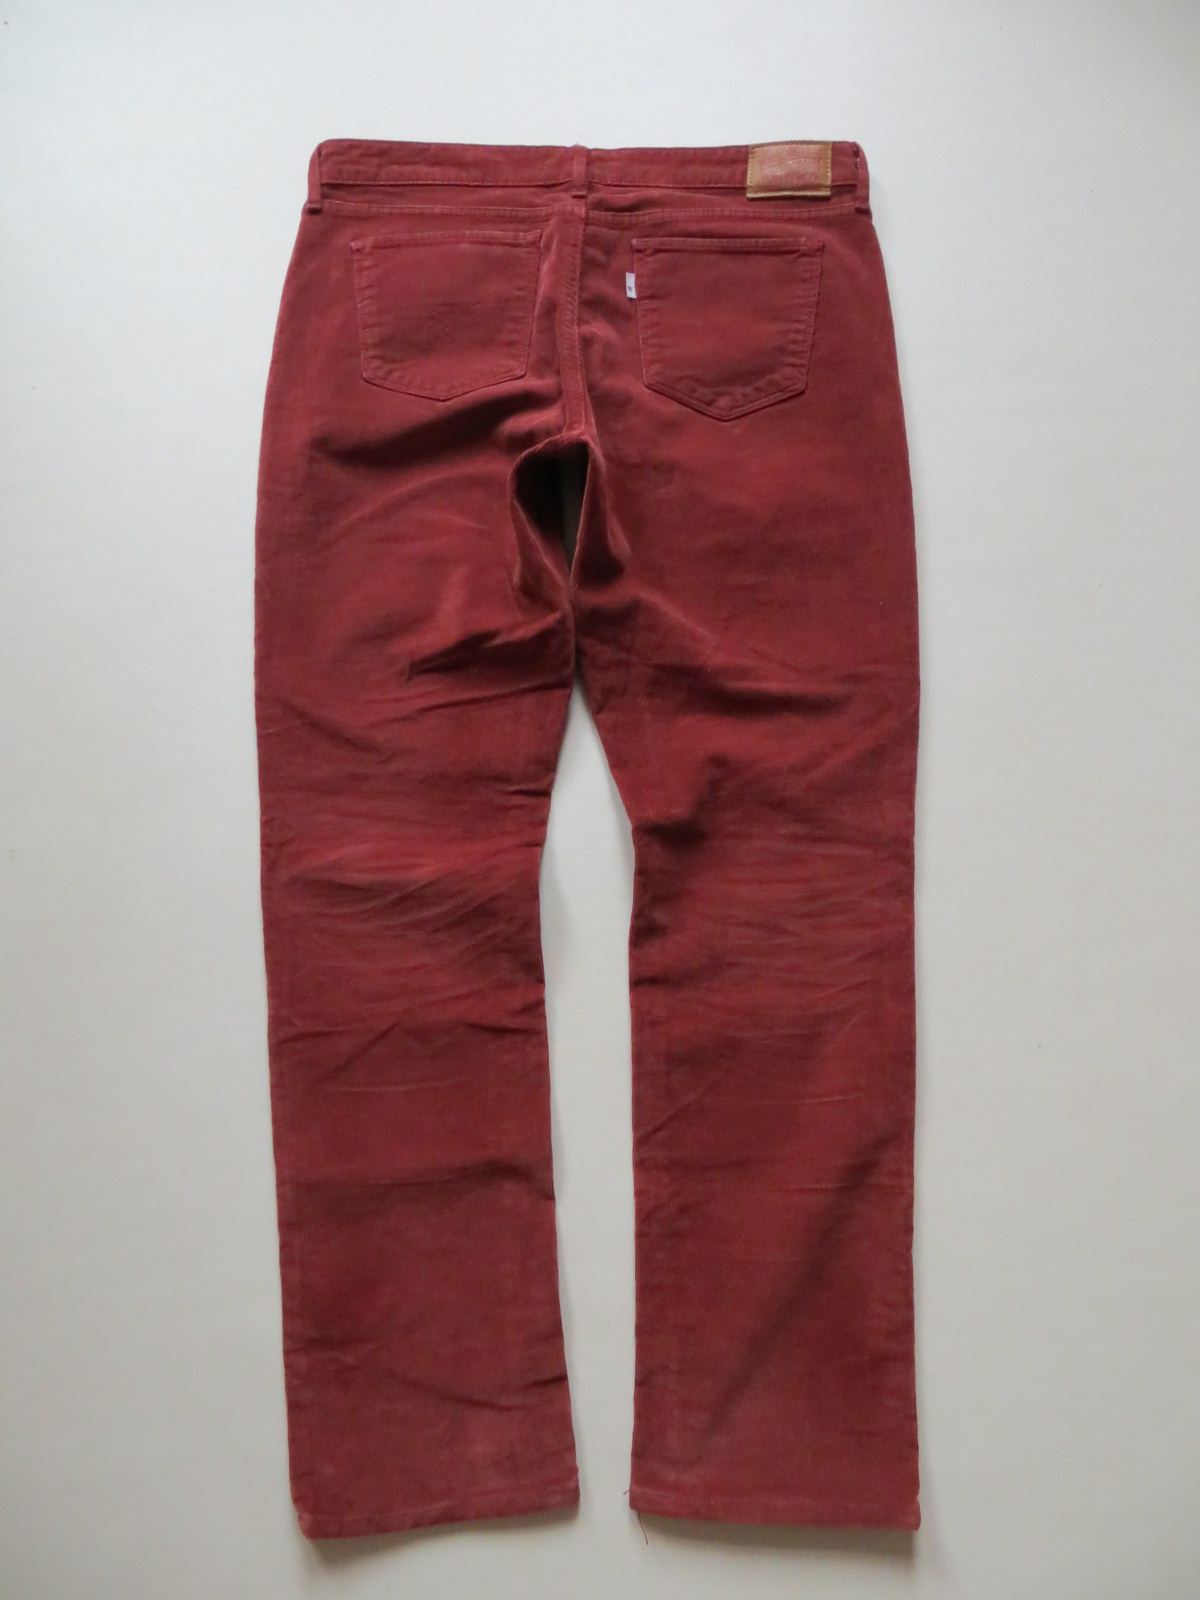 Levi's 712 Slim Cord Jeans Hose, W 33 /L 30, ROT coloured Cordhose, TOP ...